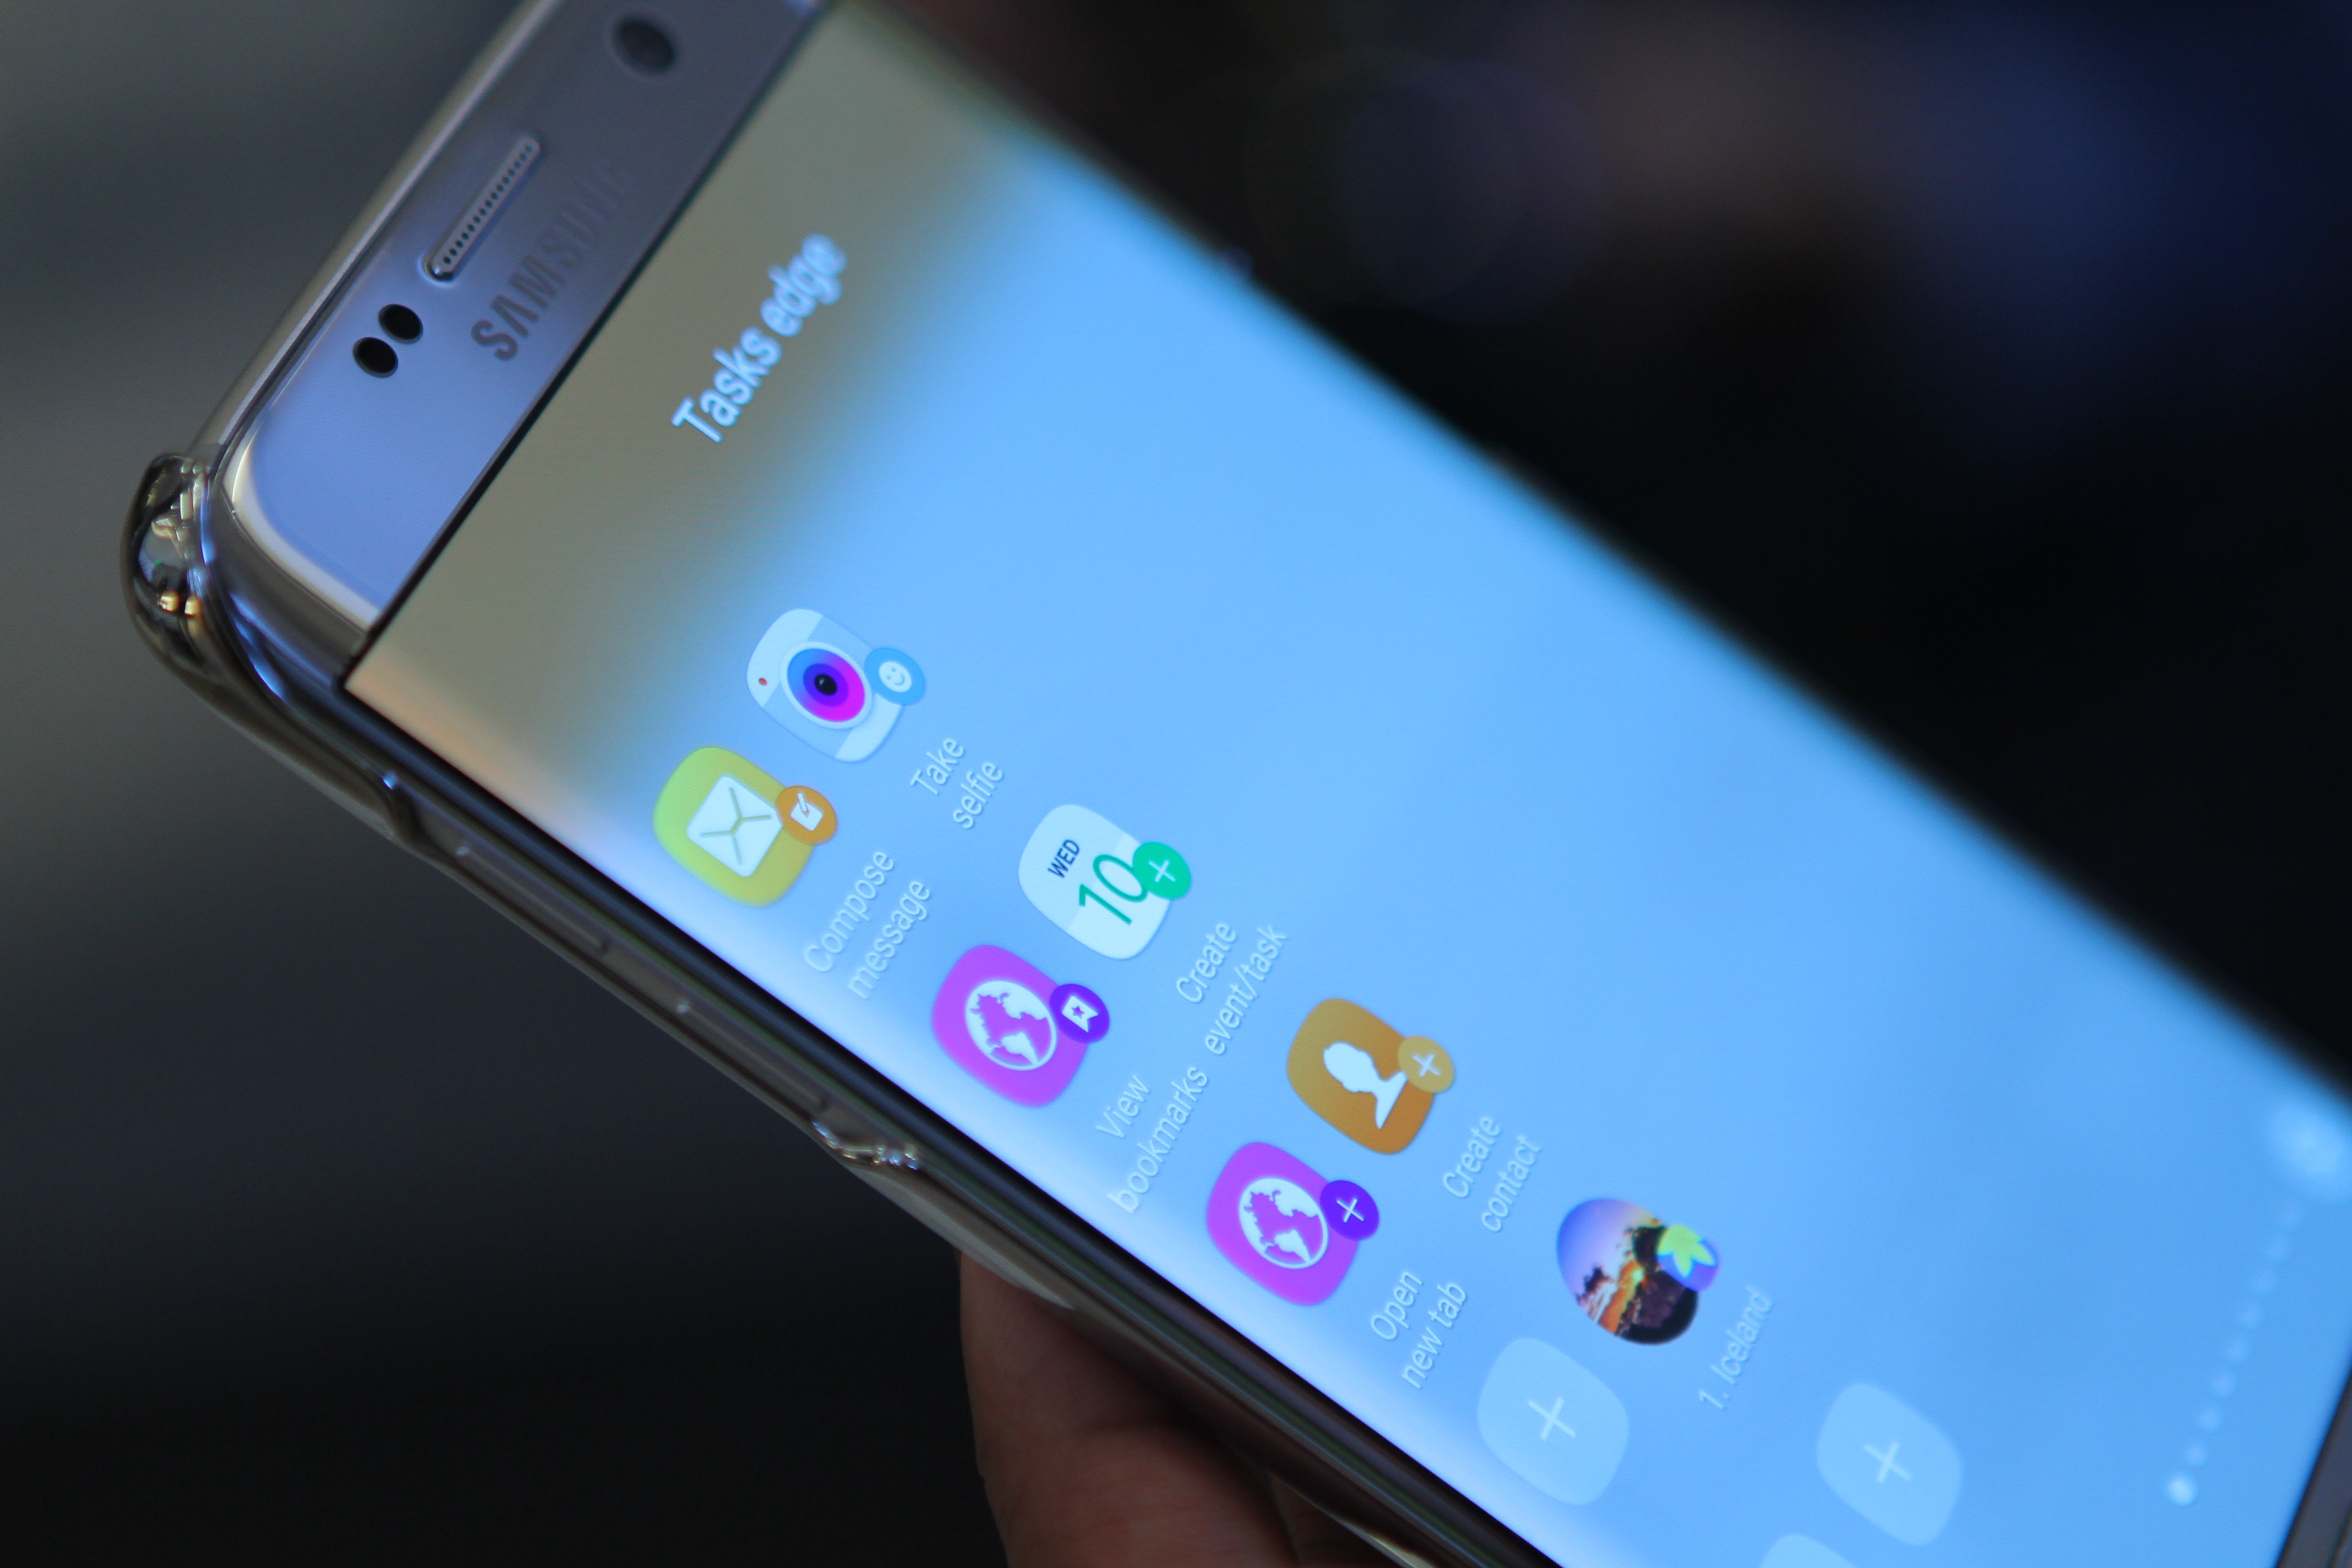 Samsung เปิดให้ทดลองใช้ Galaxy S7 ฟรี 6 วัน! กับกิจกรรม GALAXY S7 FOR 6 DAYS TEST DRIVE